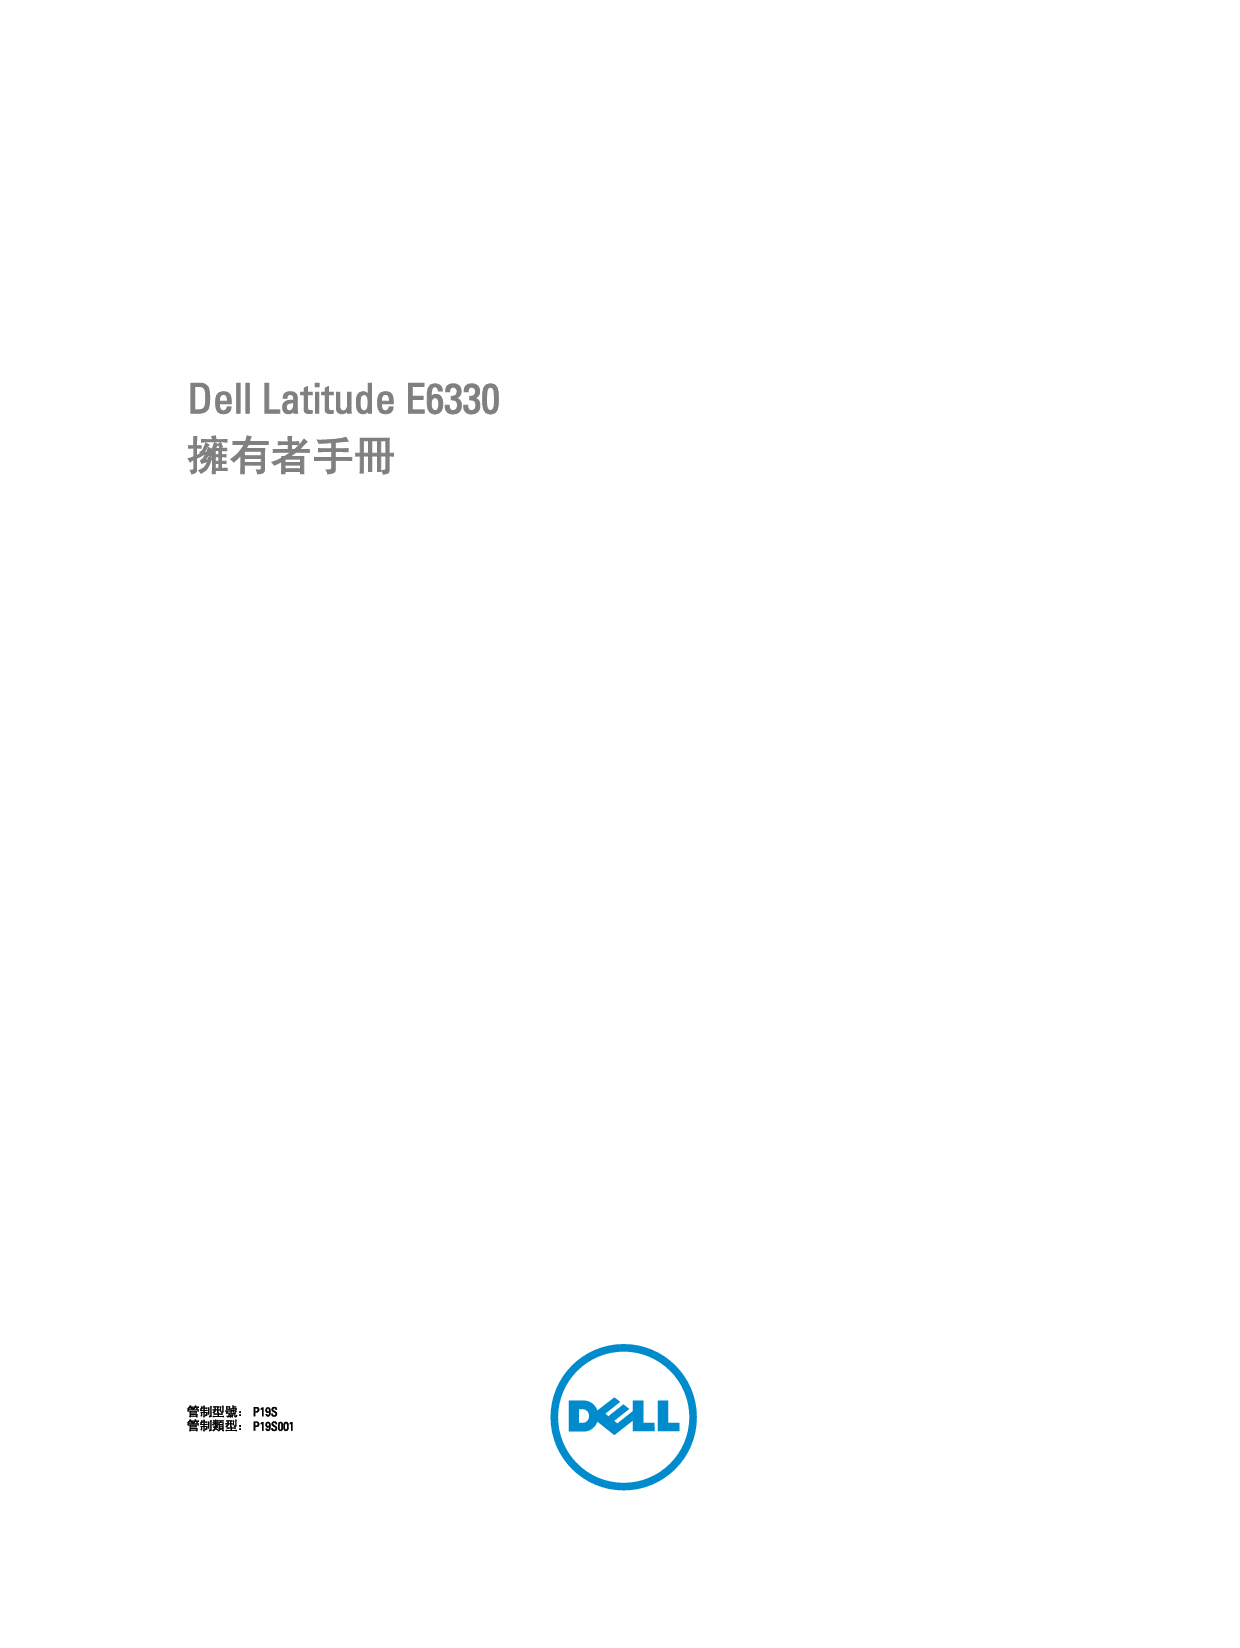 戴尔 Dell Latitude E6330 繁体 用户手册 封面